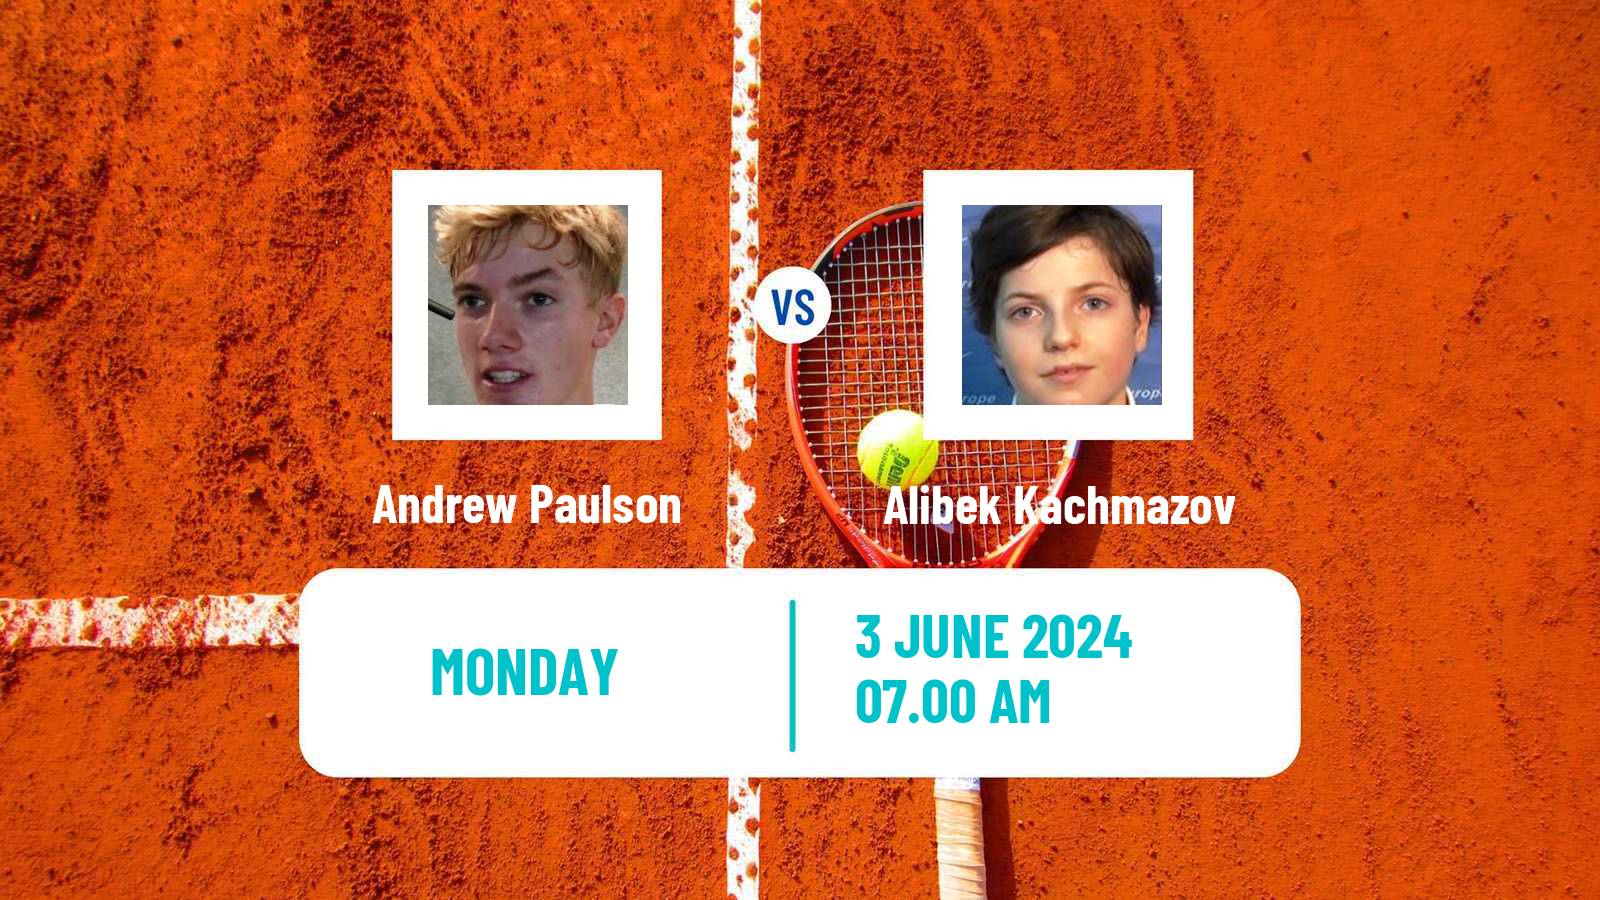 Tennis Prostejov Challenger Men Andrew Paulson - Alibek Kachmazov